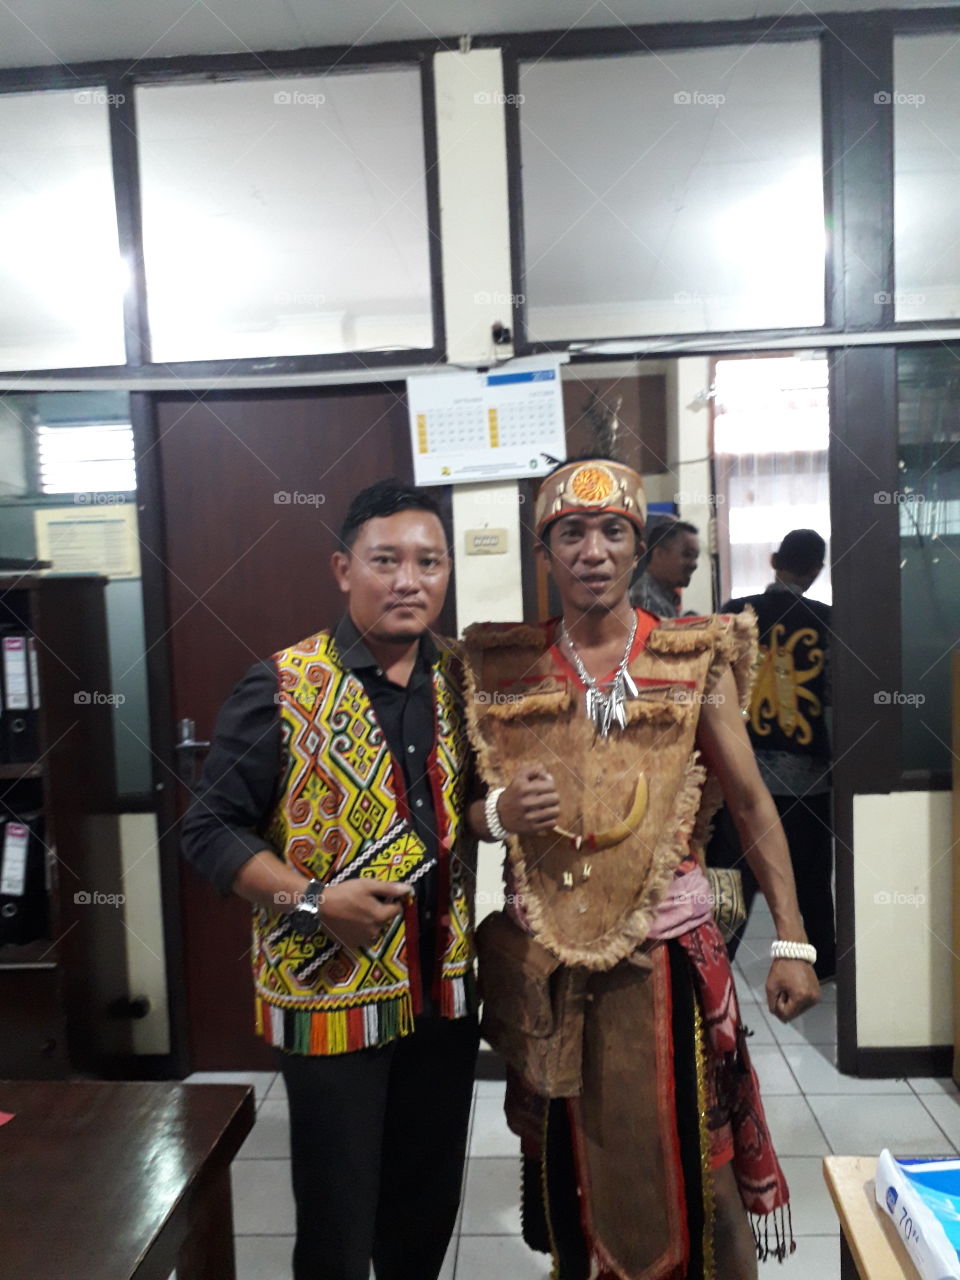 The Dayak Culture